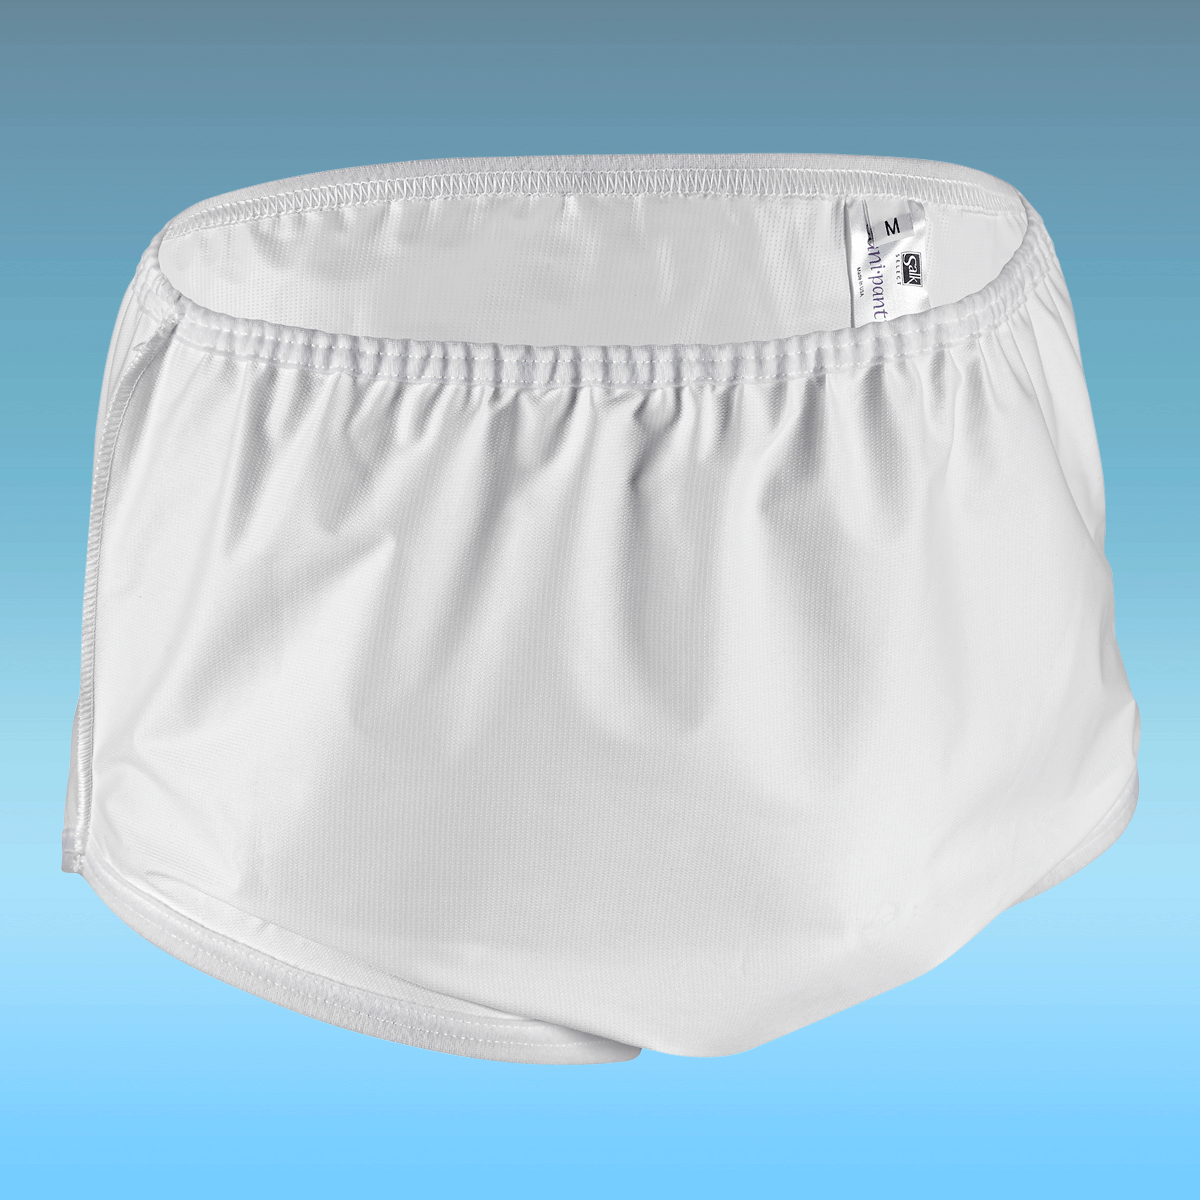 Sani-pant Reusable Plastic Pants - Cover Up